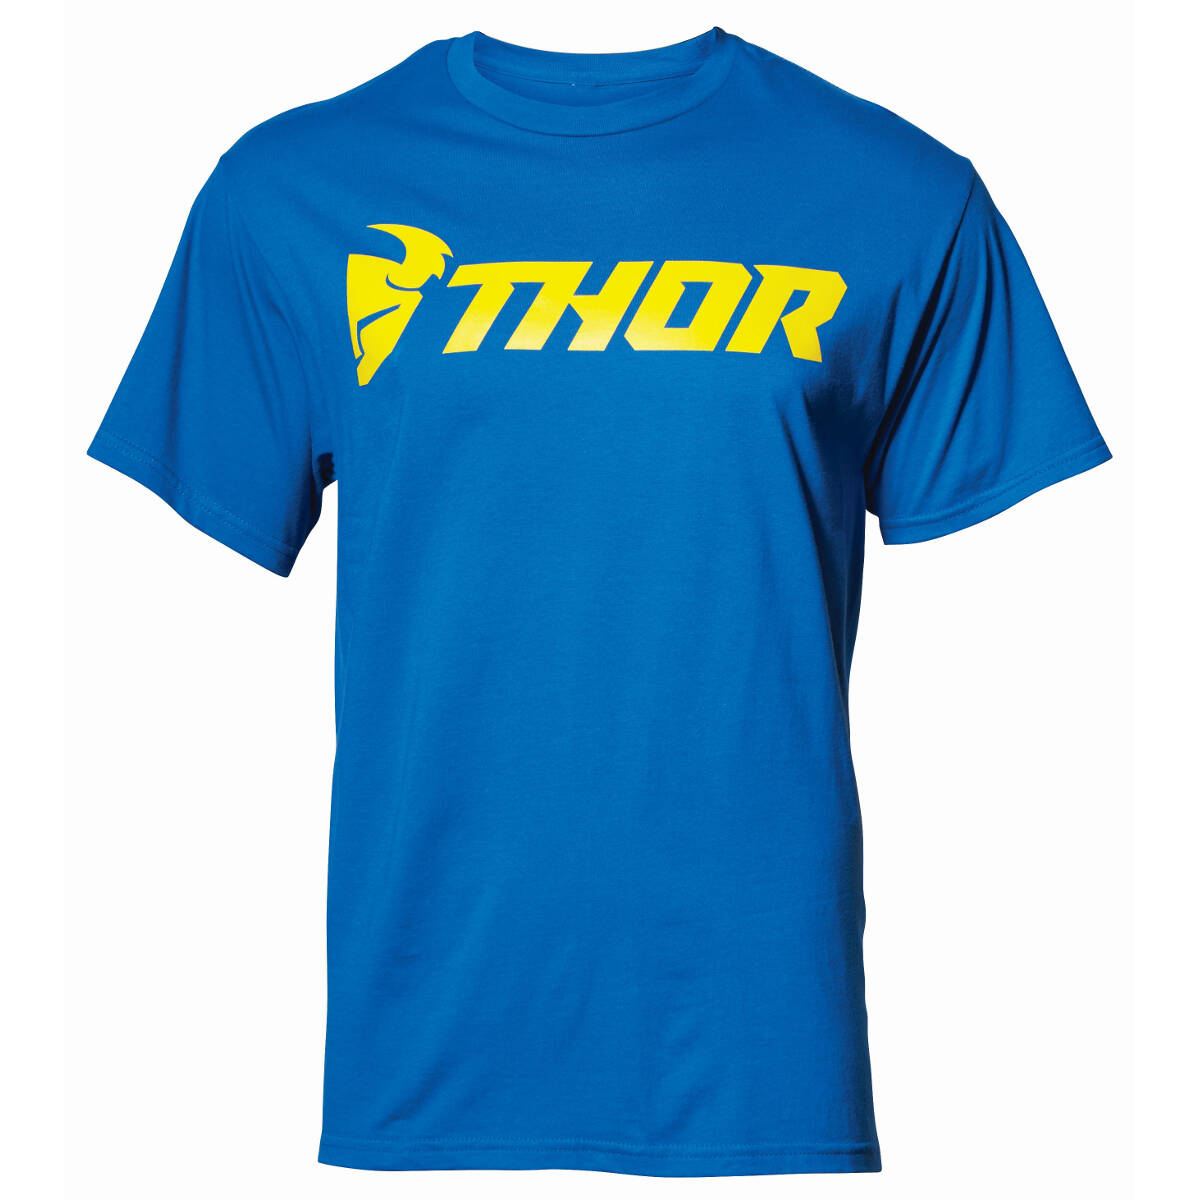 Thor T-Shirt Loud Royal